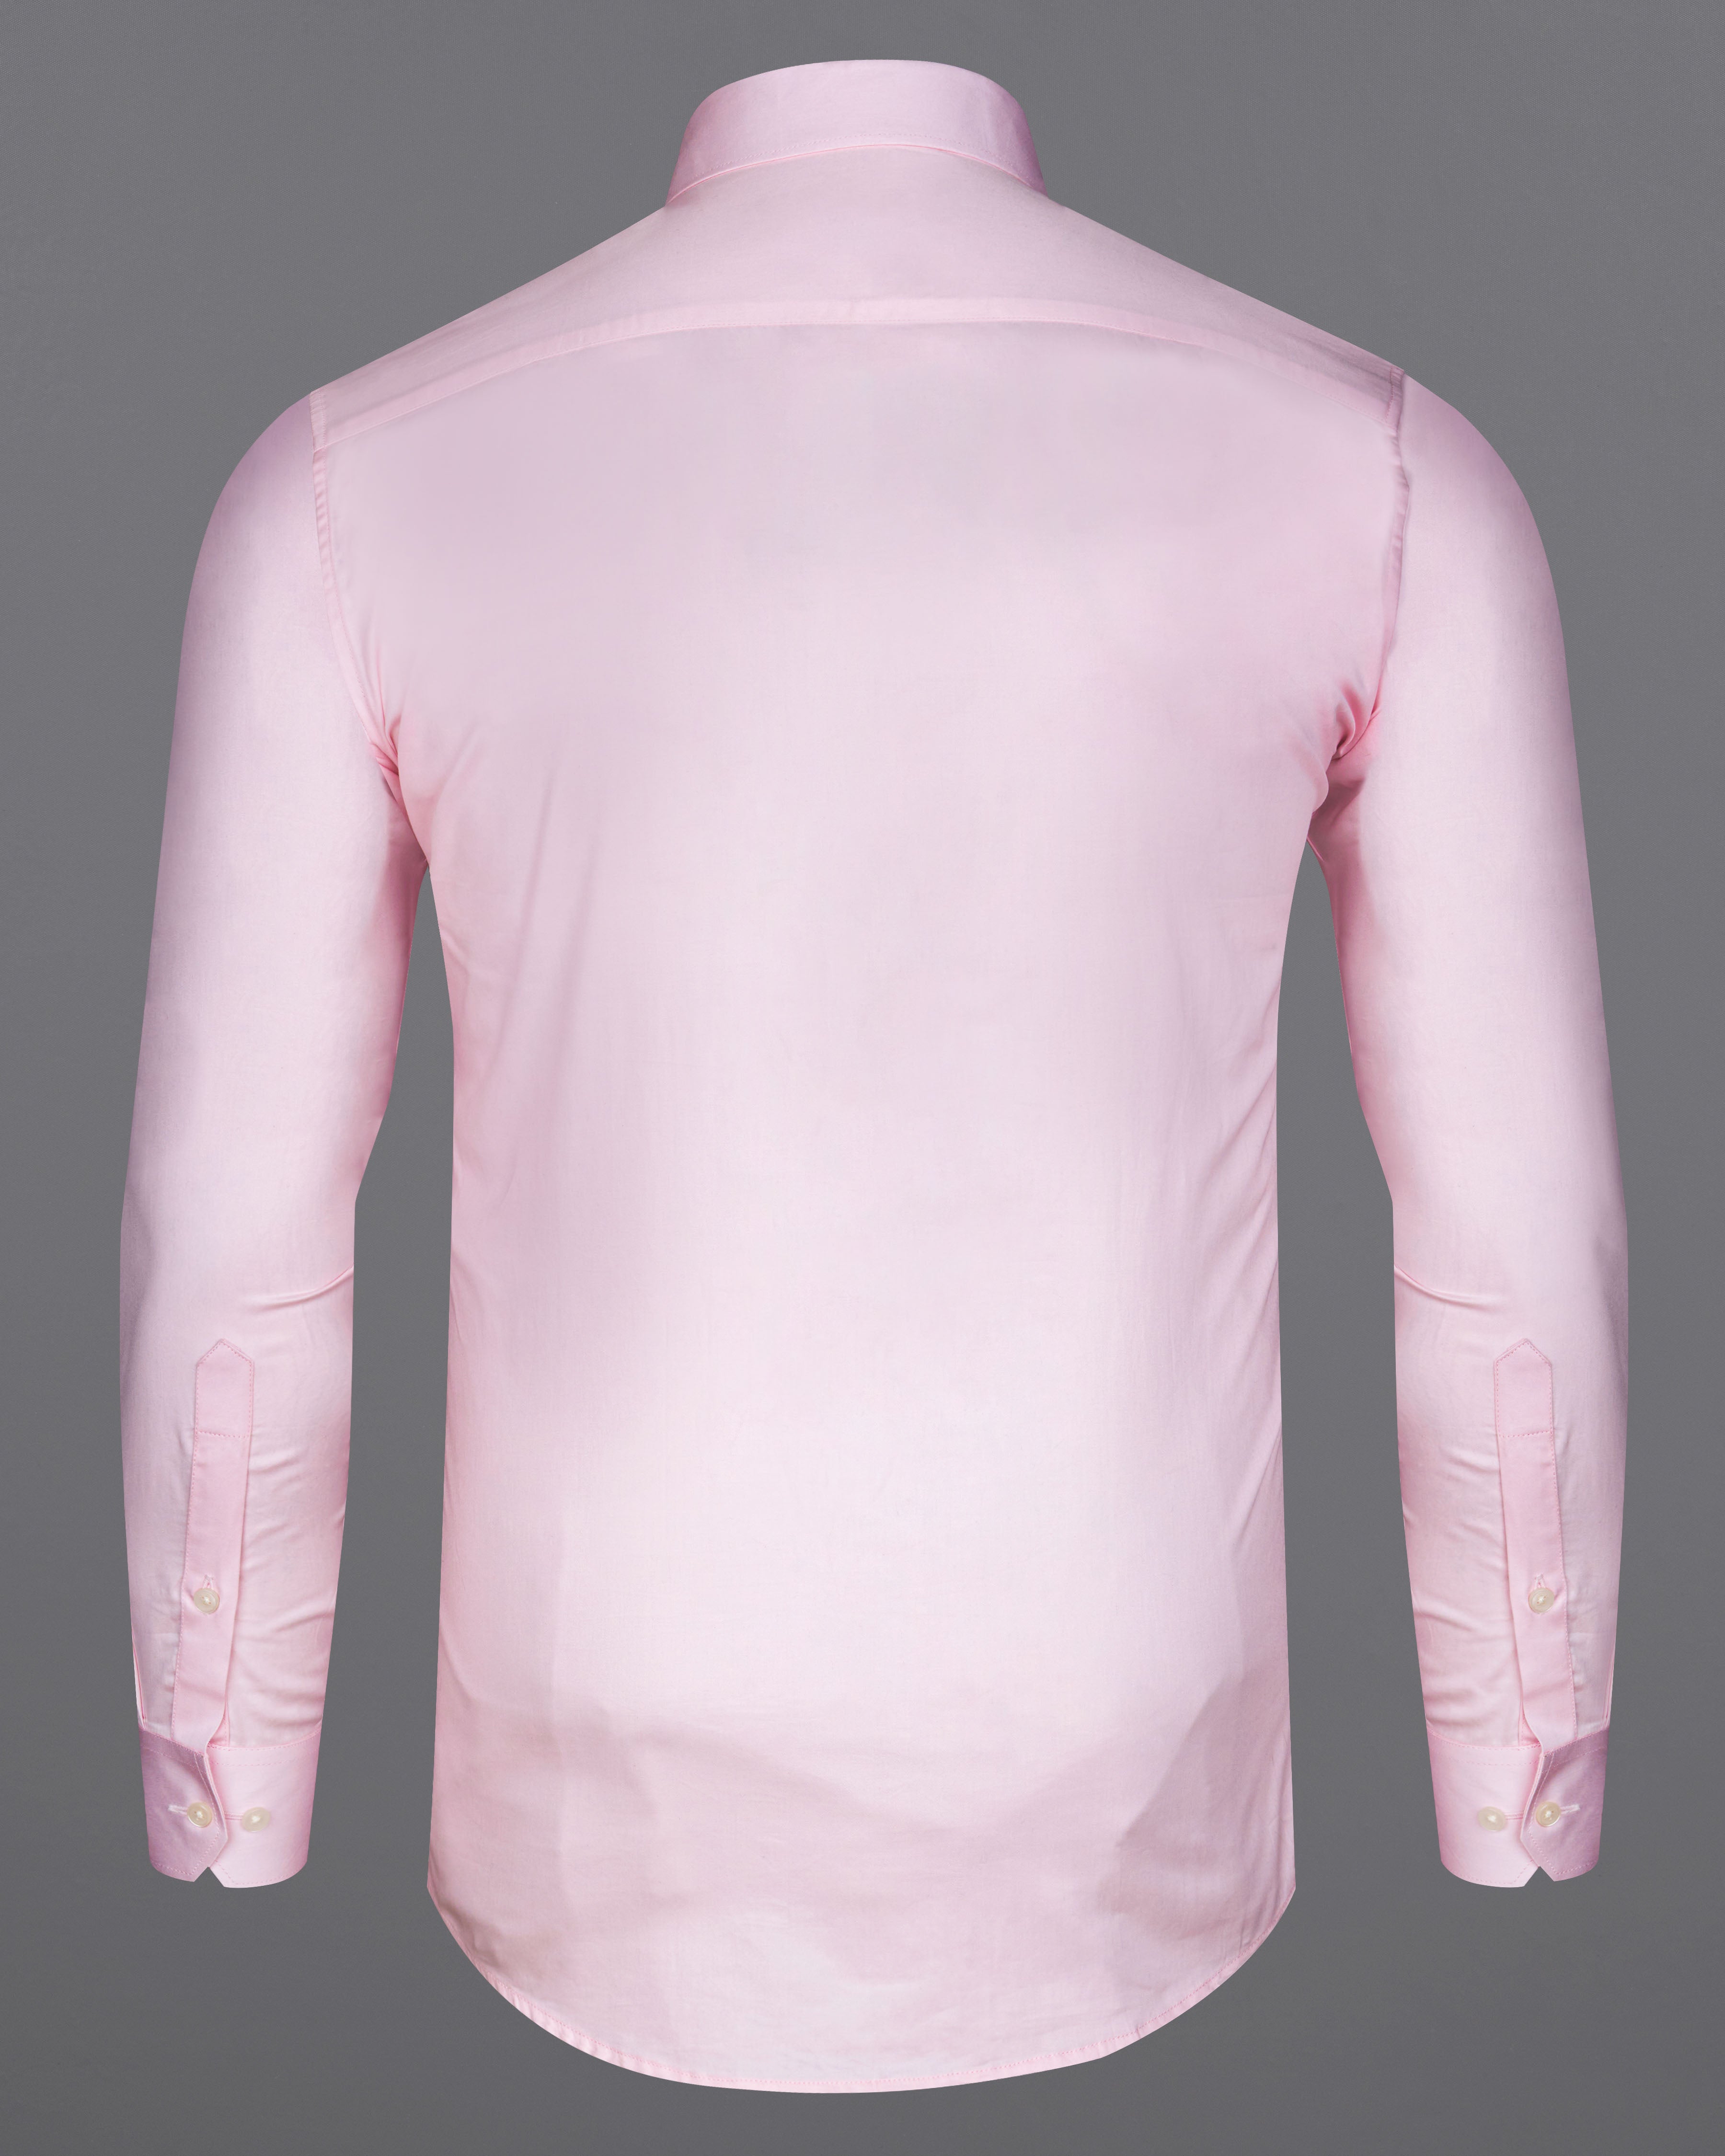 Carousel Pink Subtle Sheen Super Soft Premium Cotton Shirt 8687-BLK-38, 8687-BLK-H-38, 8687-BLK-39, 8687-BLK-H-39, 8687-BLK-40, 8687-BLK-H-40, 8687-BLK-42, 8687-BLK-H-42, 8687-BLK-44, 8687-BLK-H-44, 8687-BLK-46, 8687-BLK-H-46, 8687-BLK-48, 8687-BLK-H-48, 8687-BLK-50, 8687-BLK-H-50, 8687-BLK-52, 8687-BLK-H-52